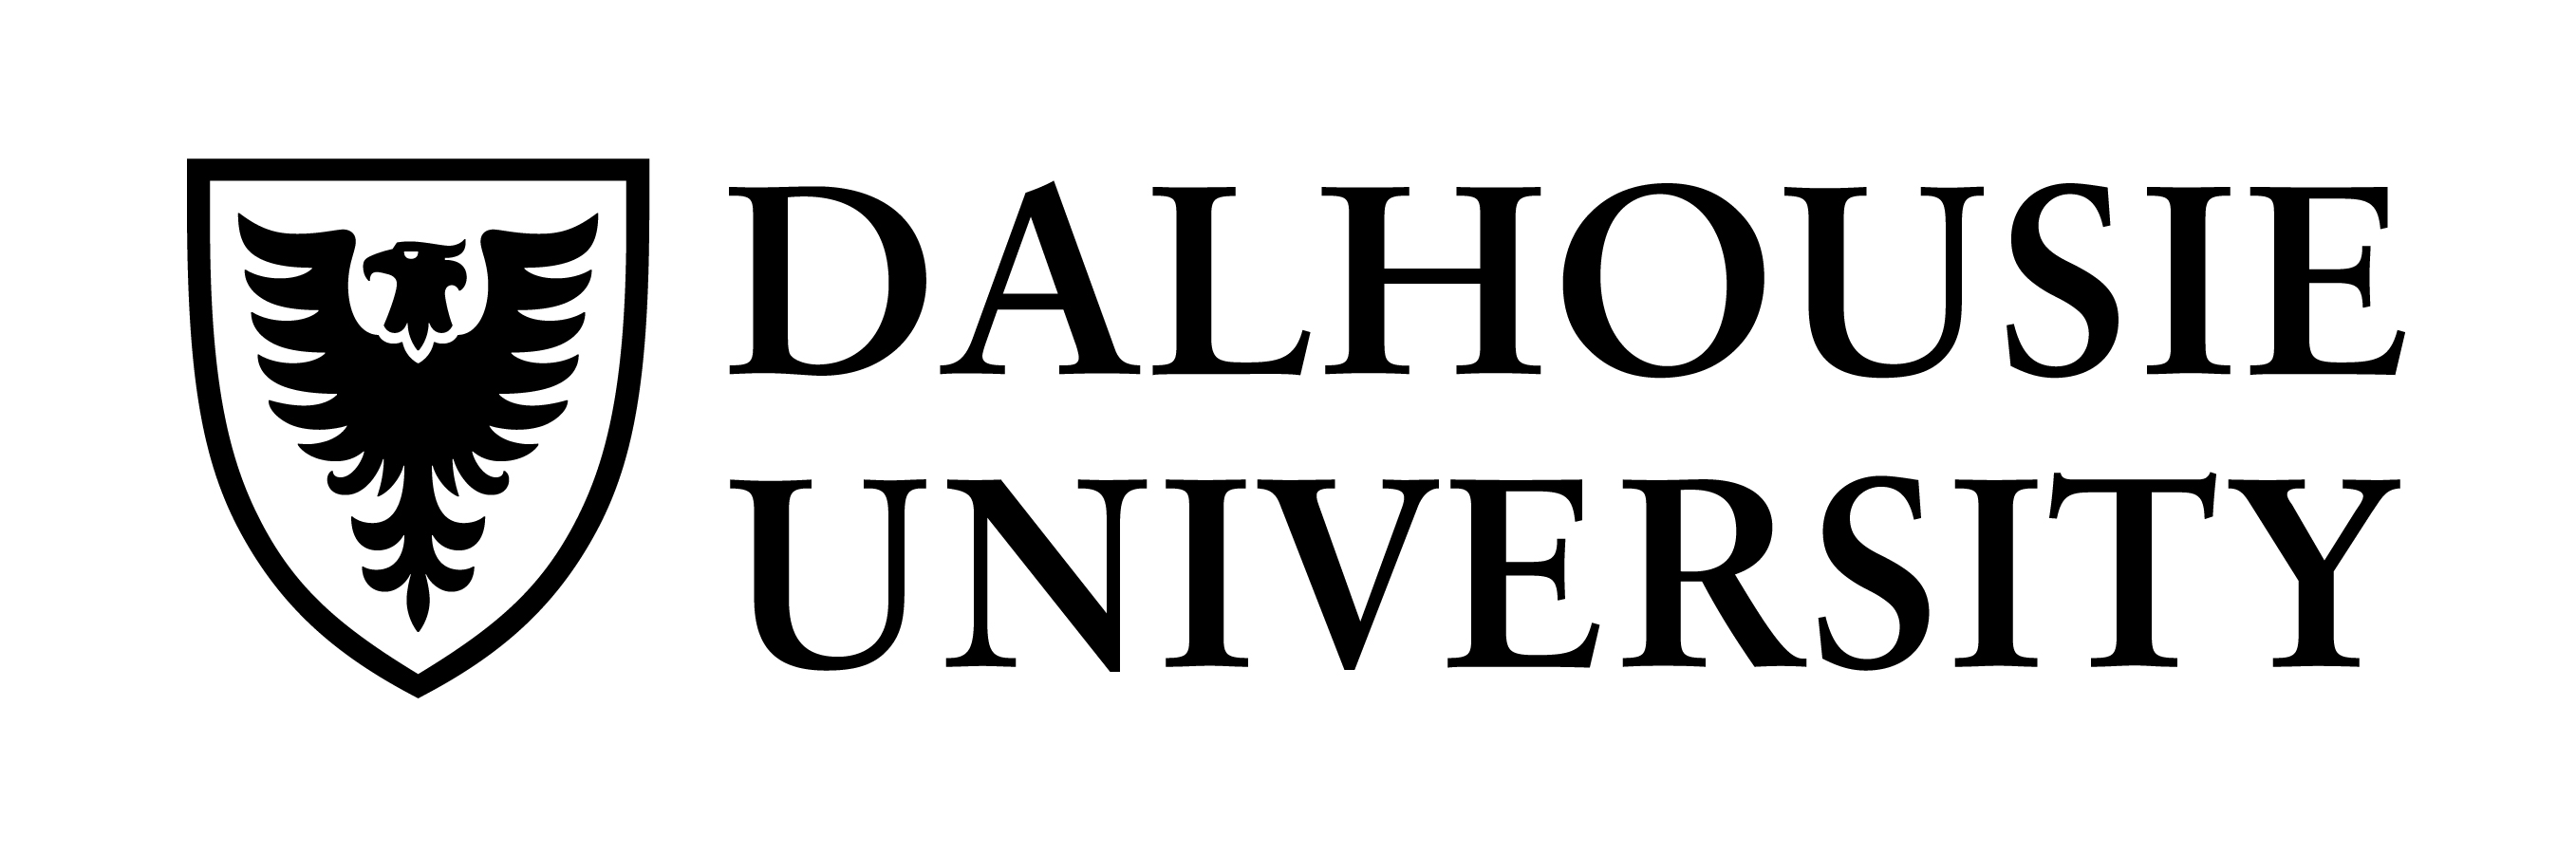 Logos - Communications, Marketing & Creative Services - Dalhousie University